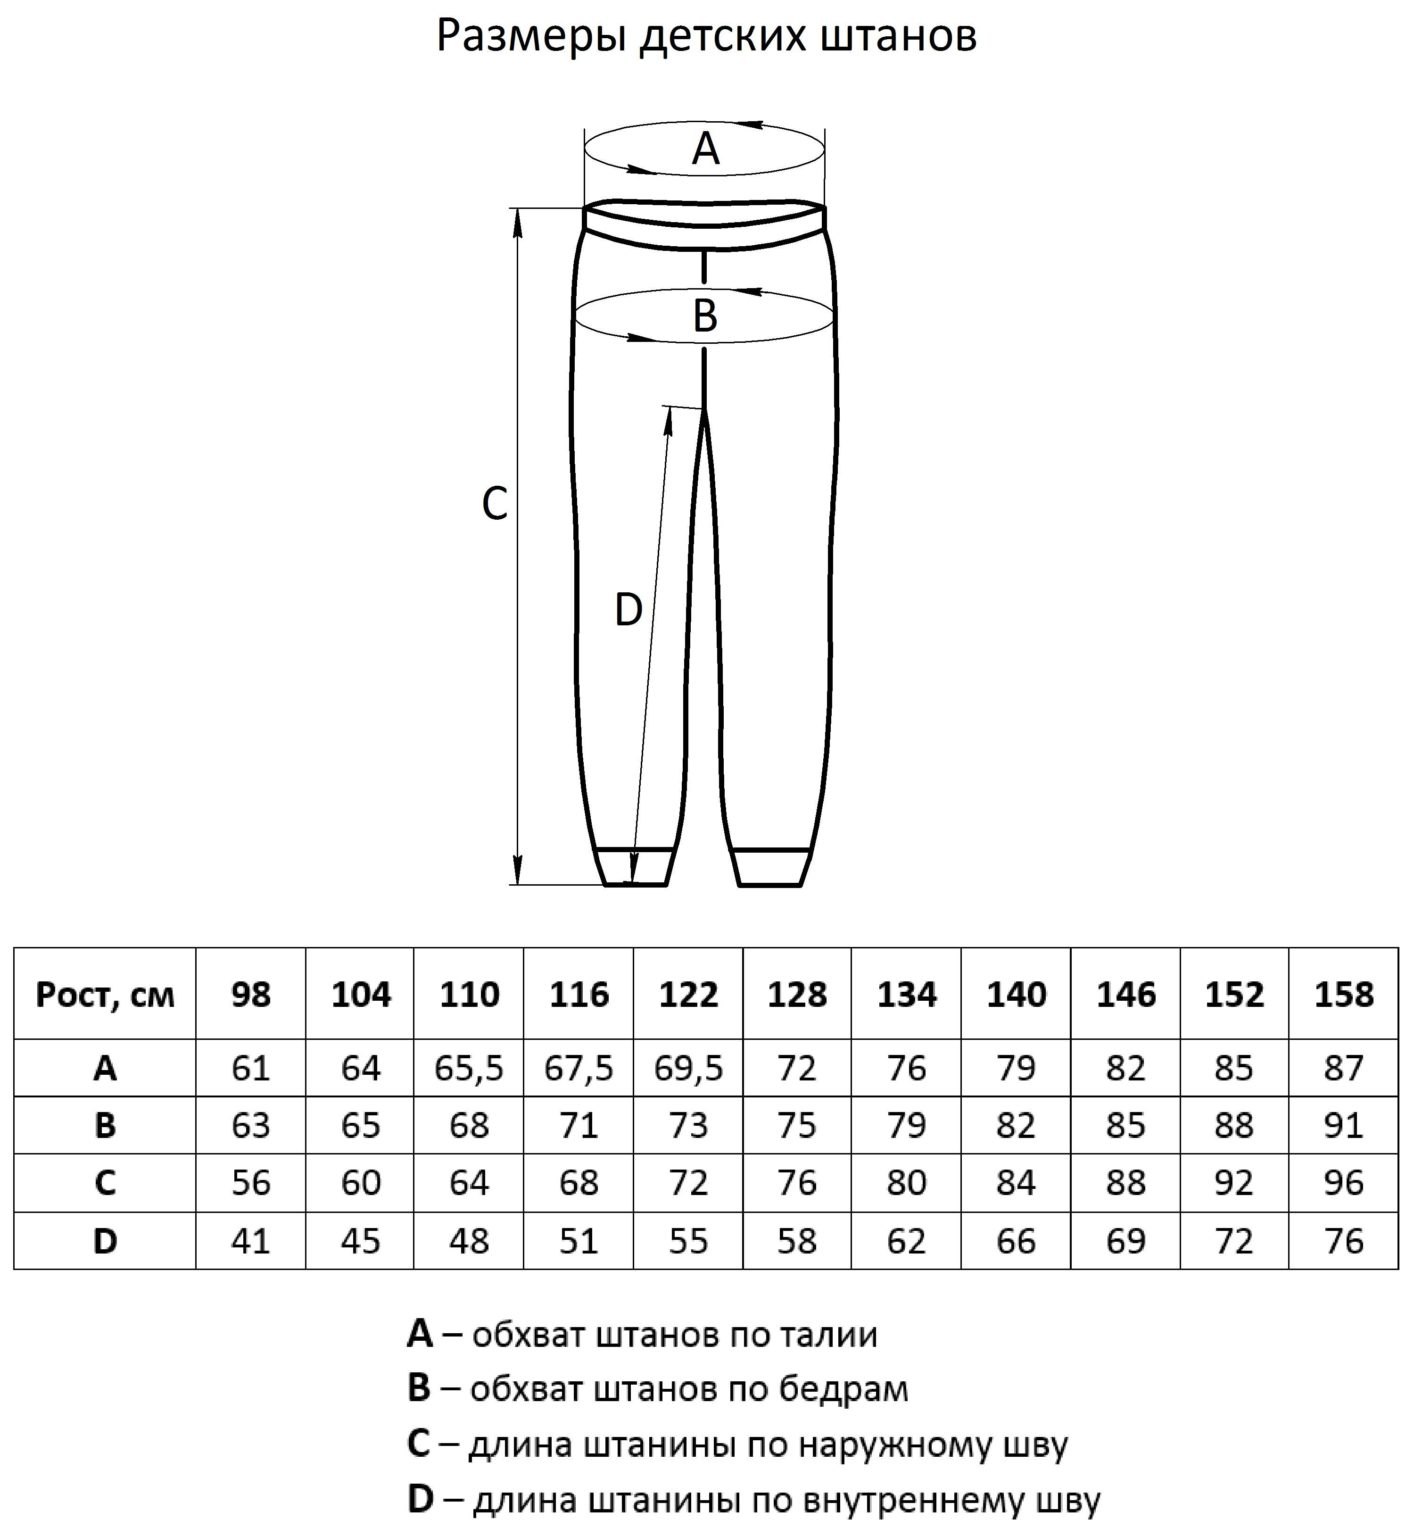 Размер брюк s